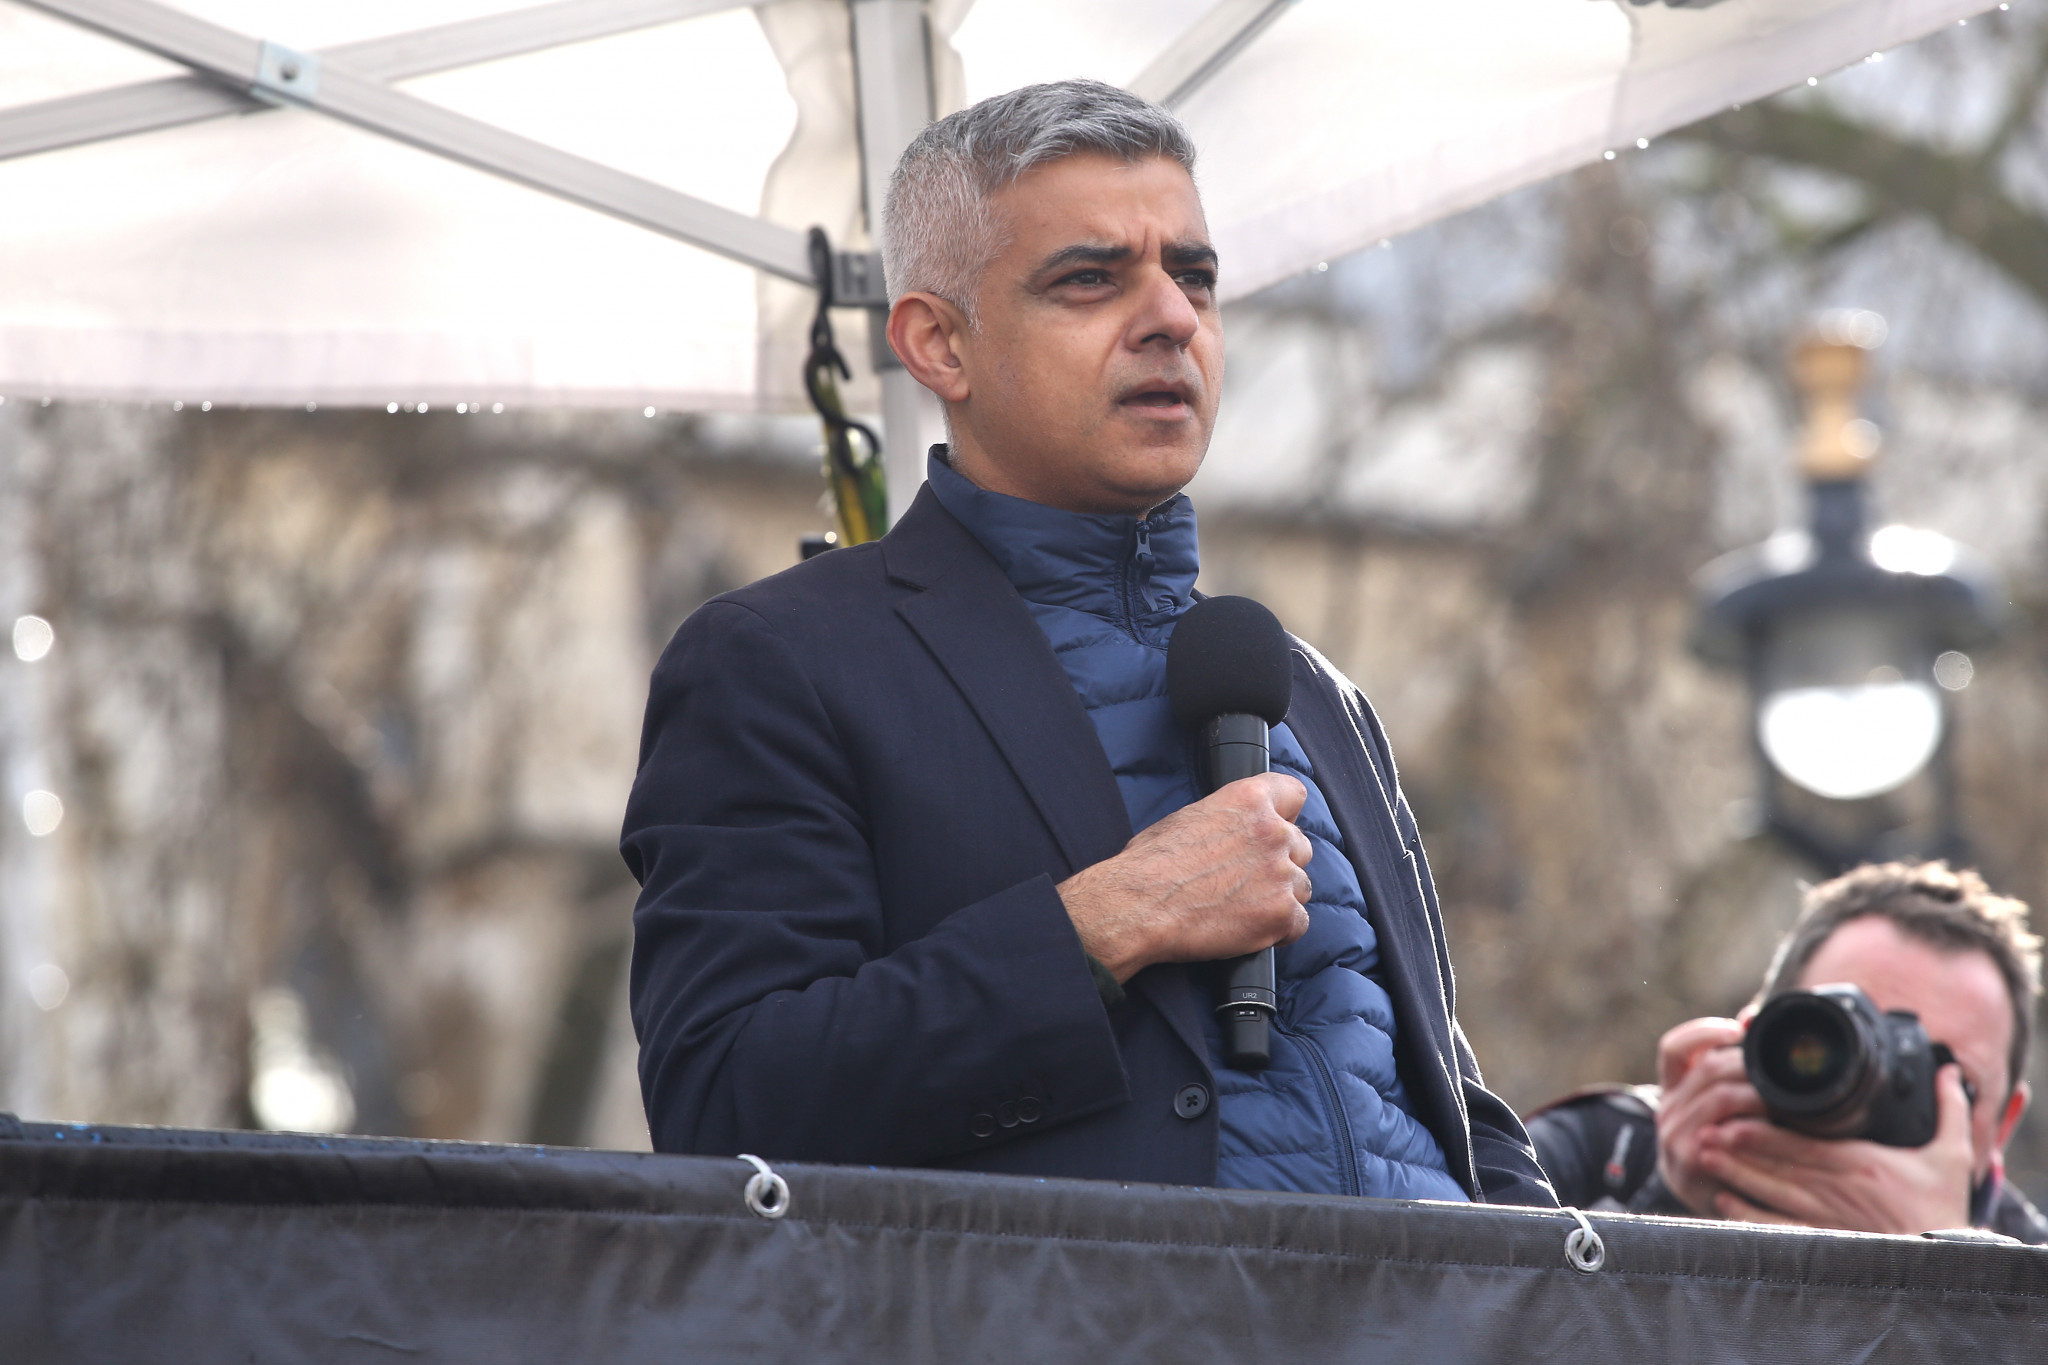 Mayor of London Sadiq Khan believes the memorial garden will be a 